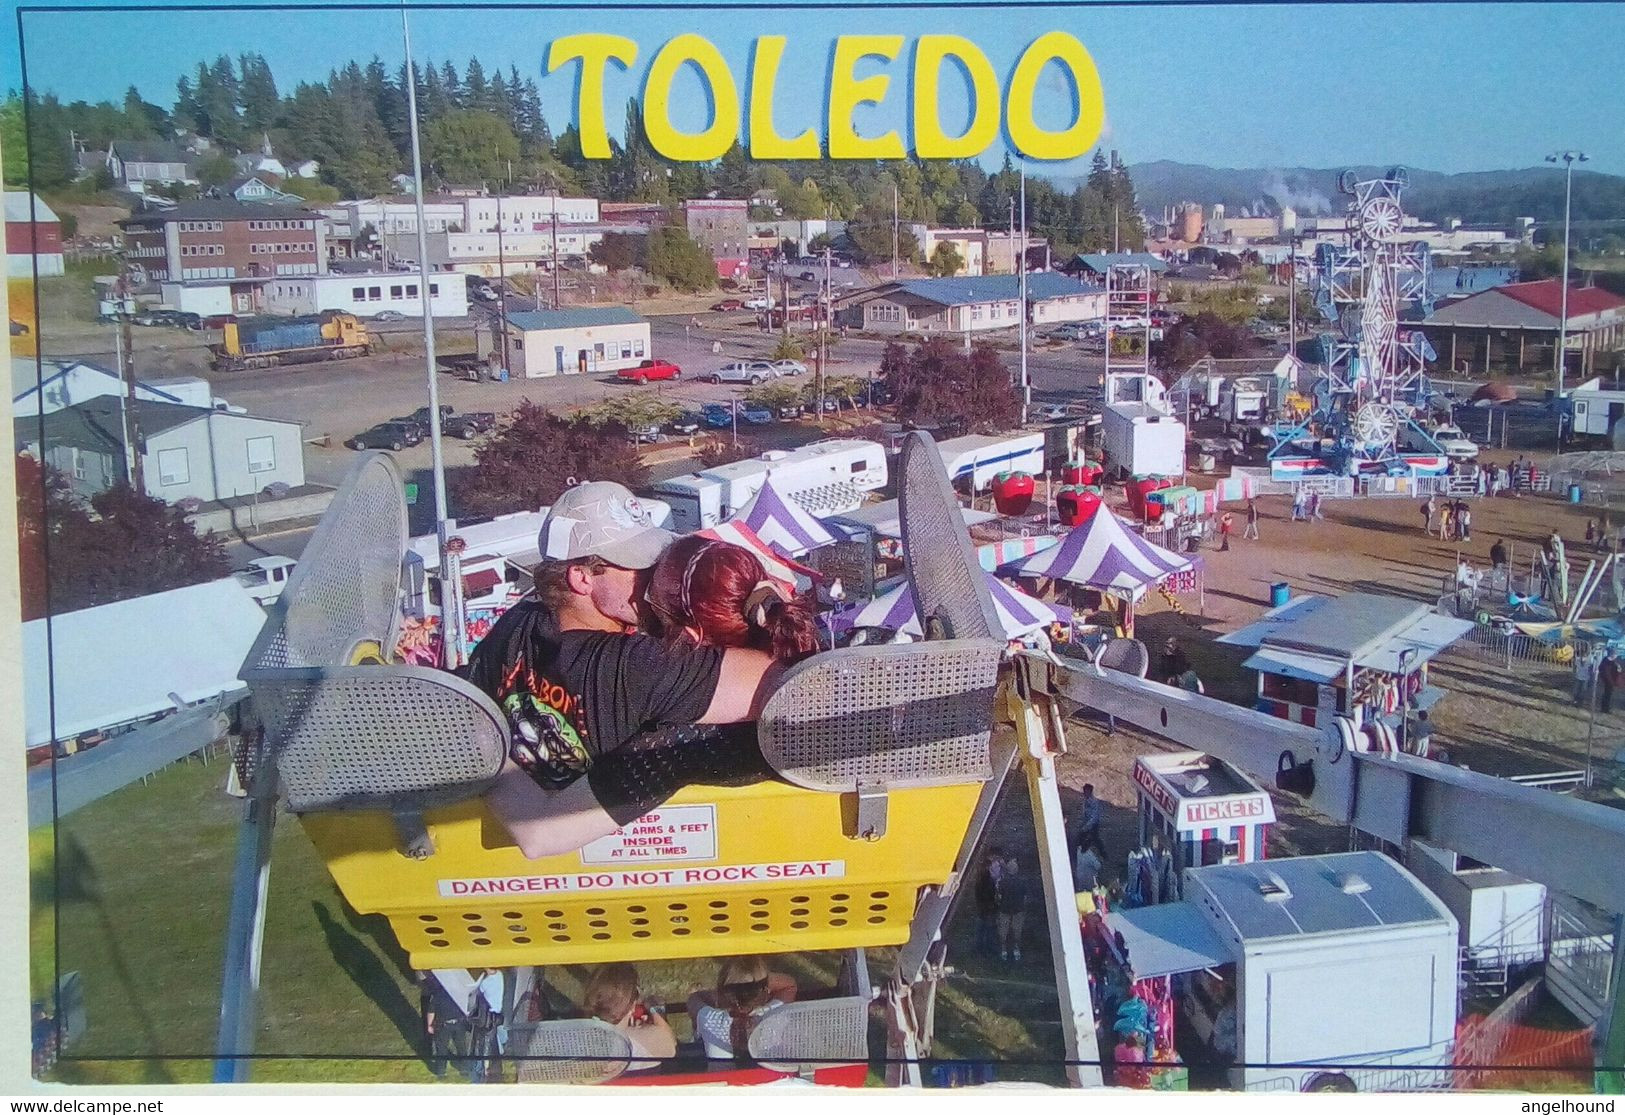 Toledo's Annual Summer Festival - Toledo